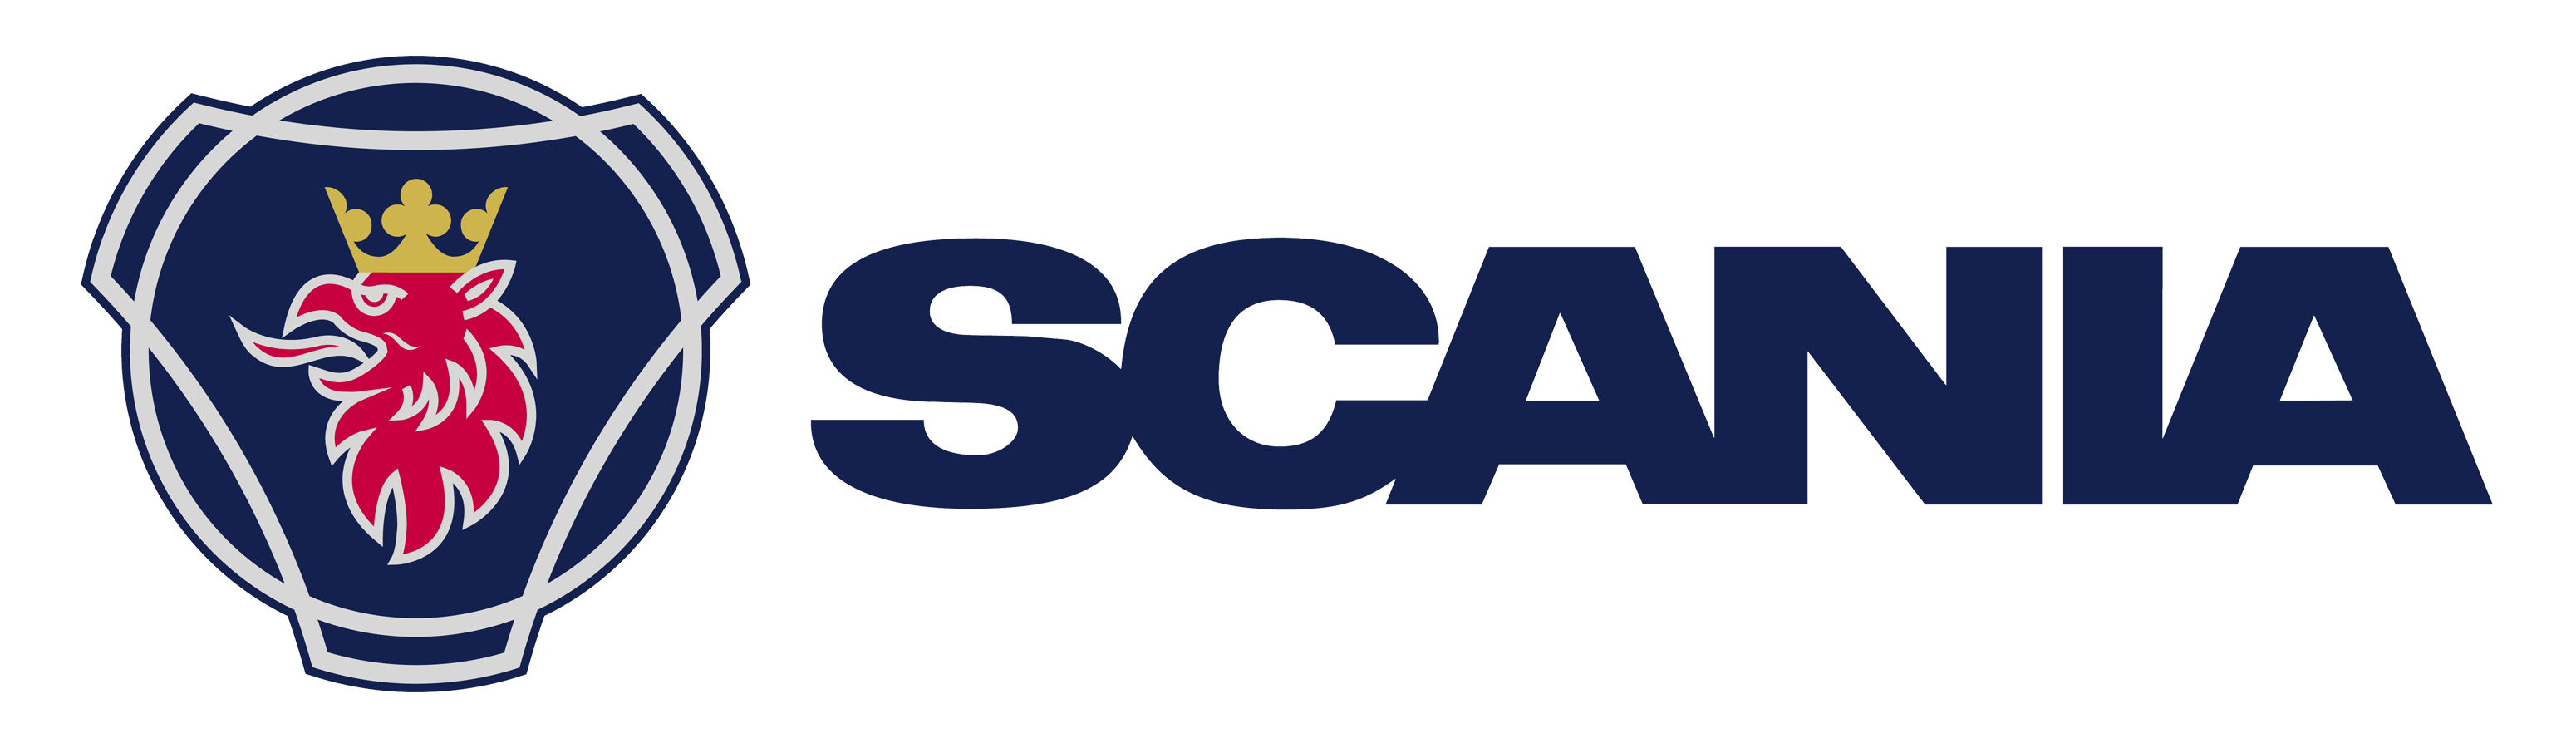 Scania logo | Dawsondirect